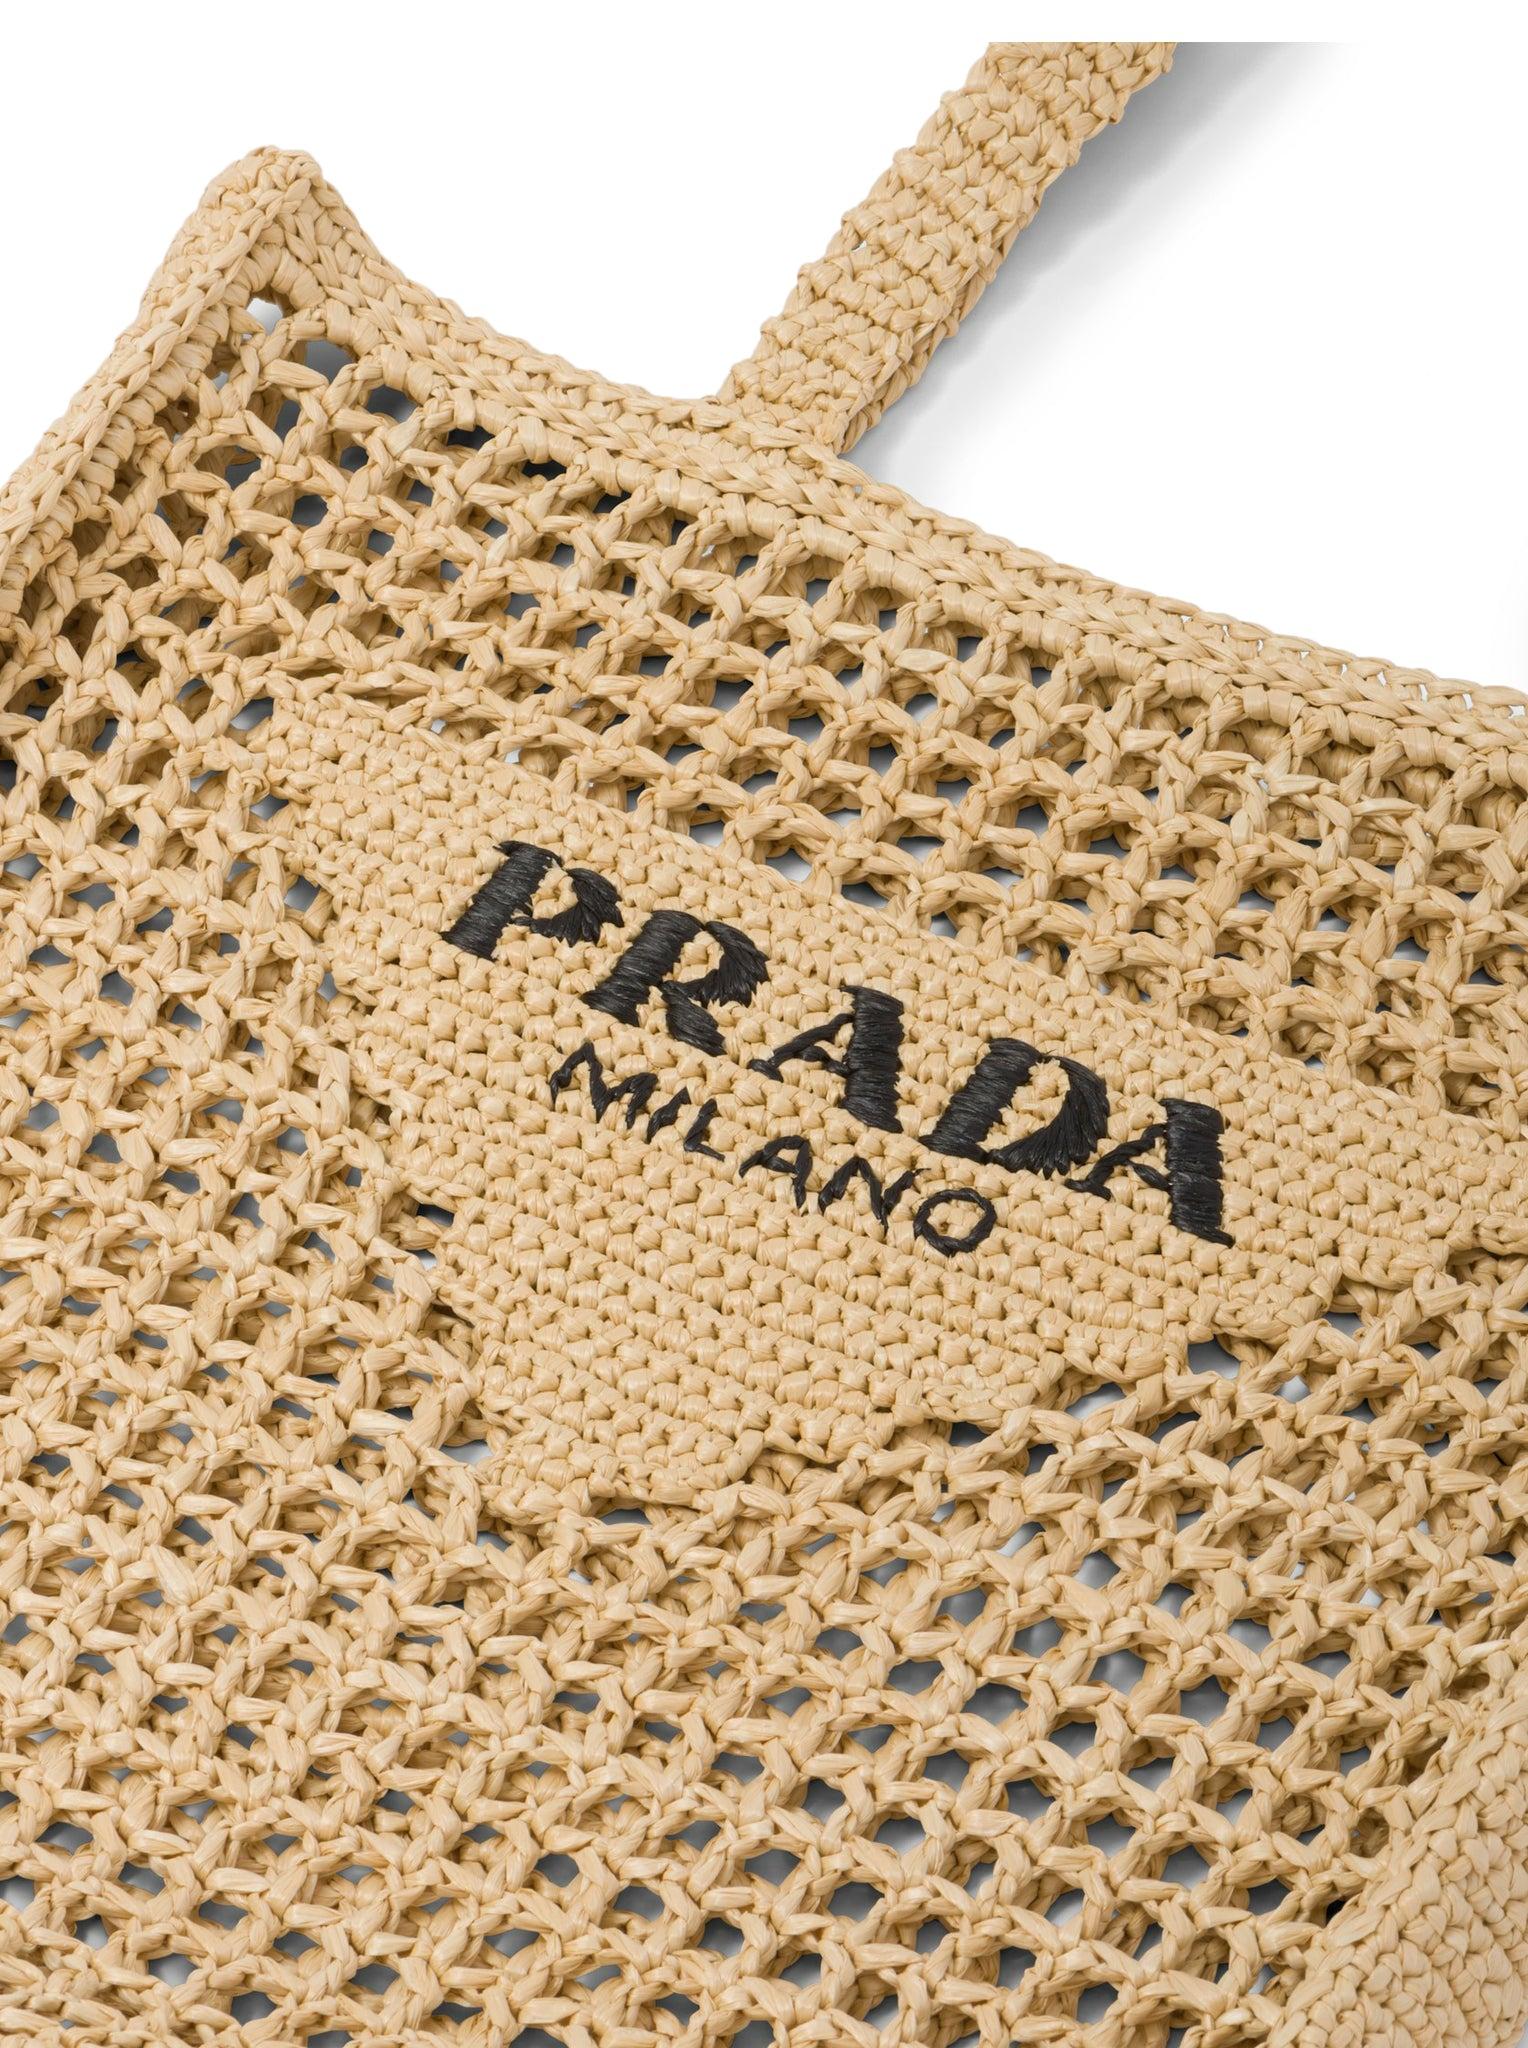 Prada Woven Fabric Shopping Bag in Natural